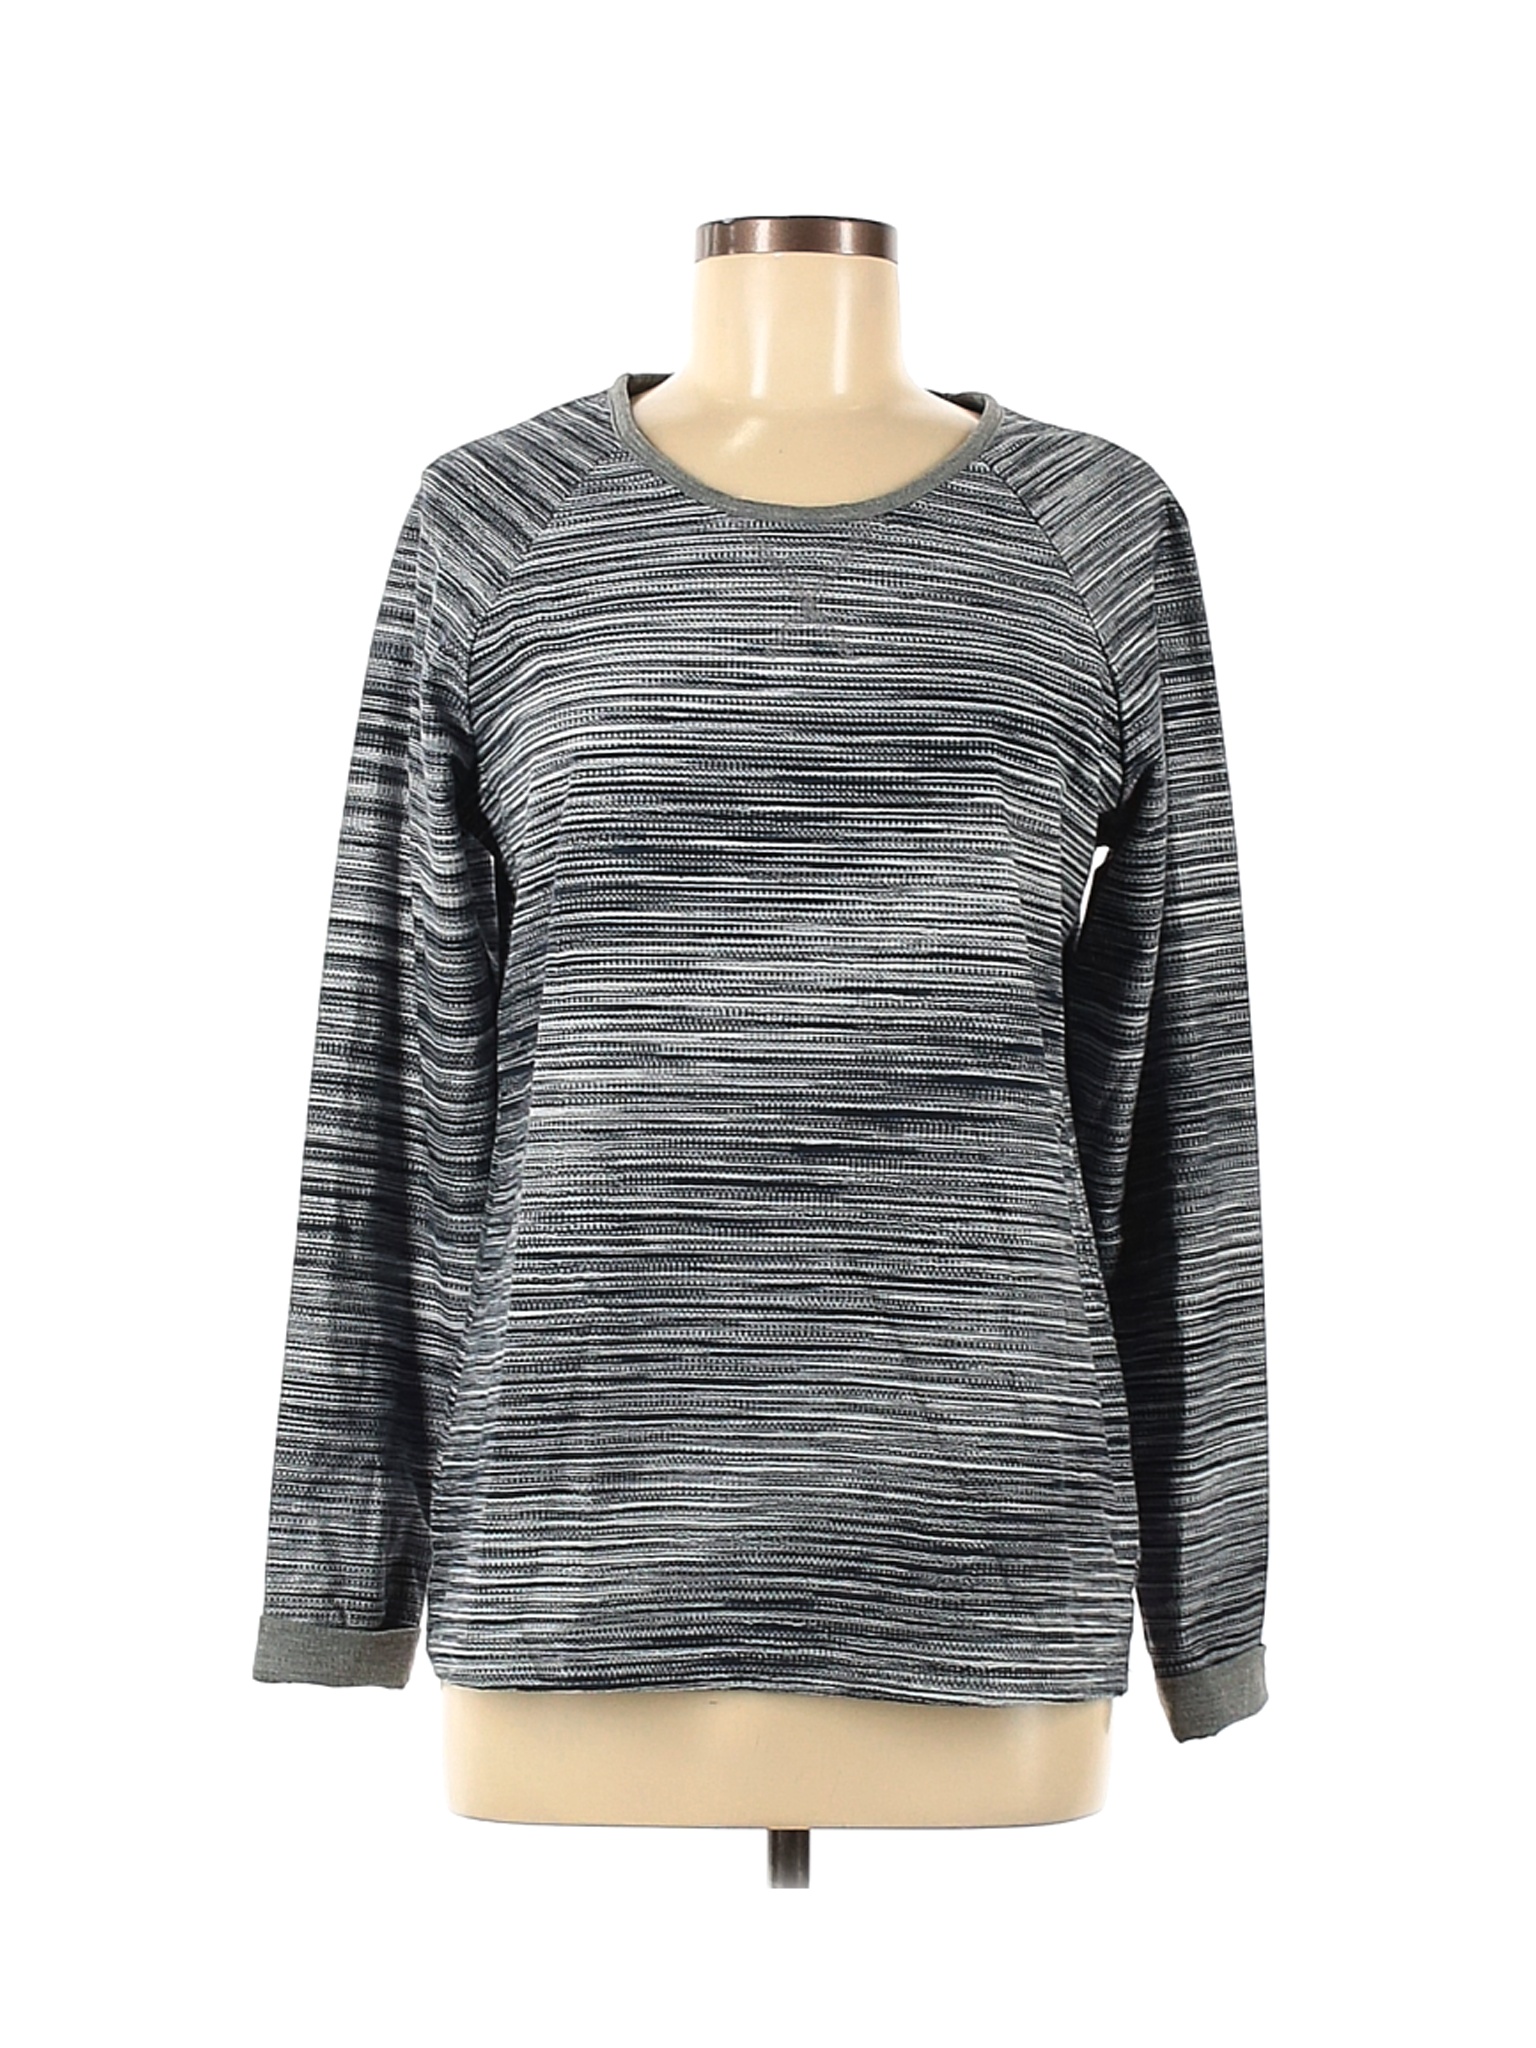 NWT Christopher & Banks Women Gray Long Sleeve T-Shirt M | eBay